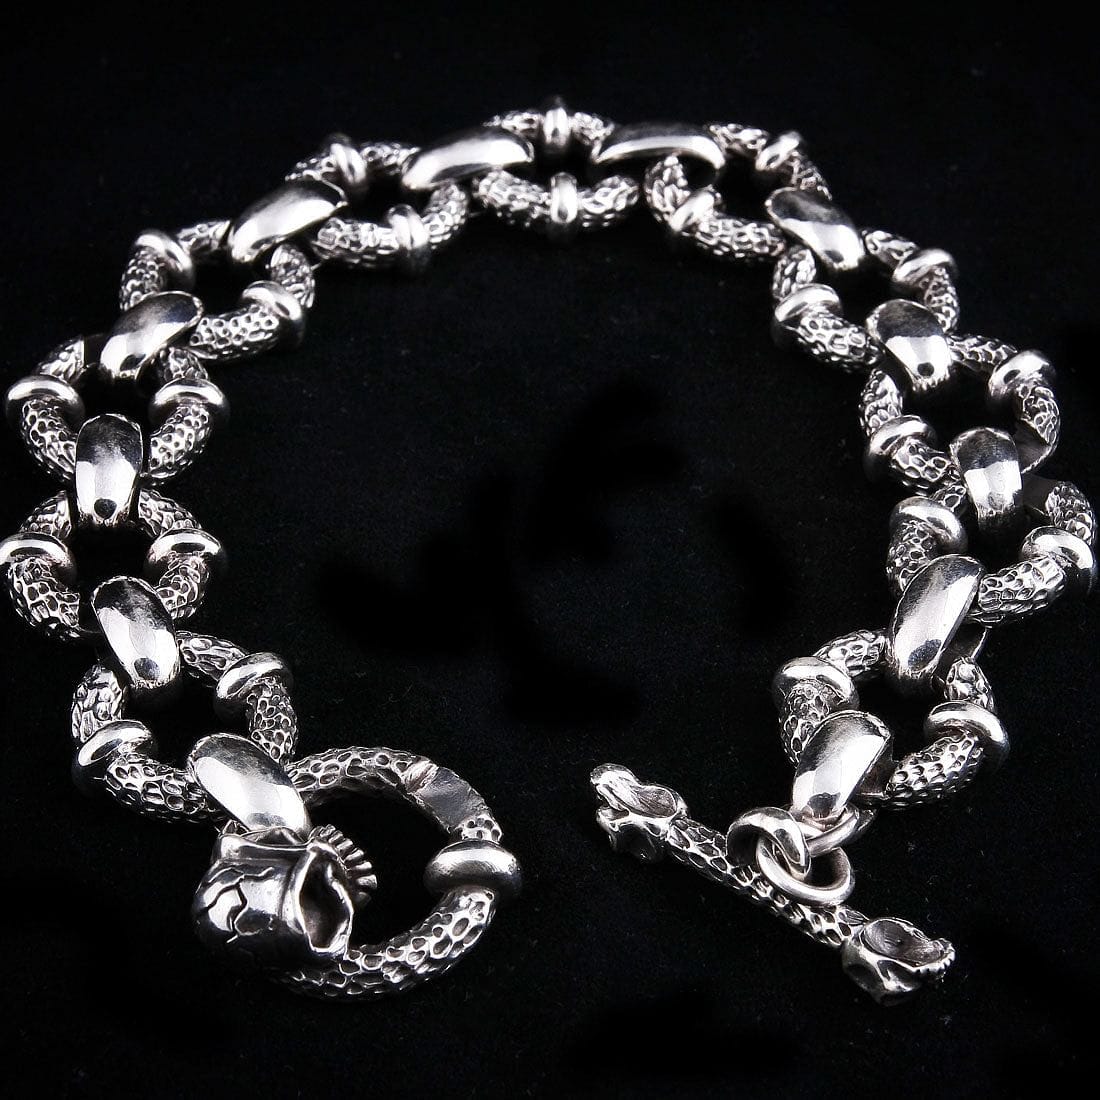 925 sterling silver skull bracelet for| Alibaba.com